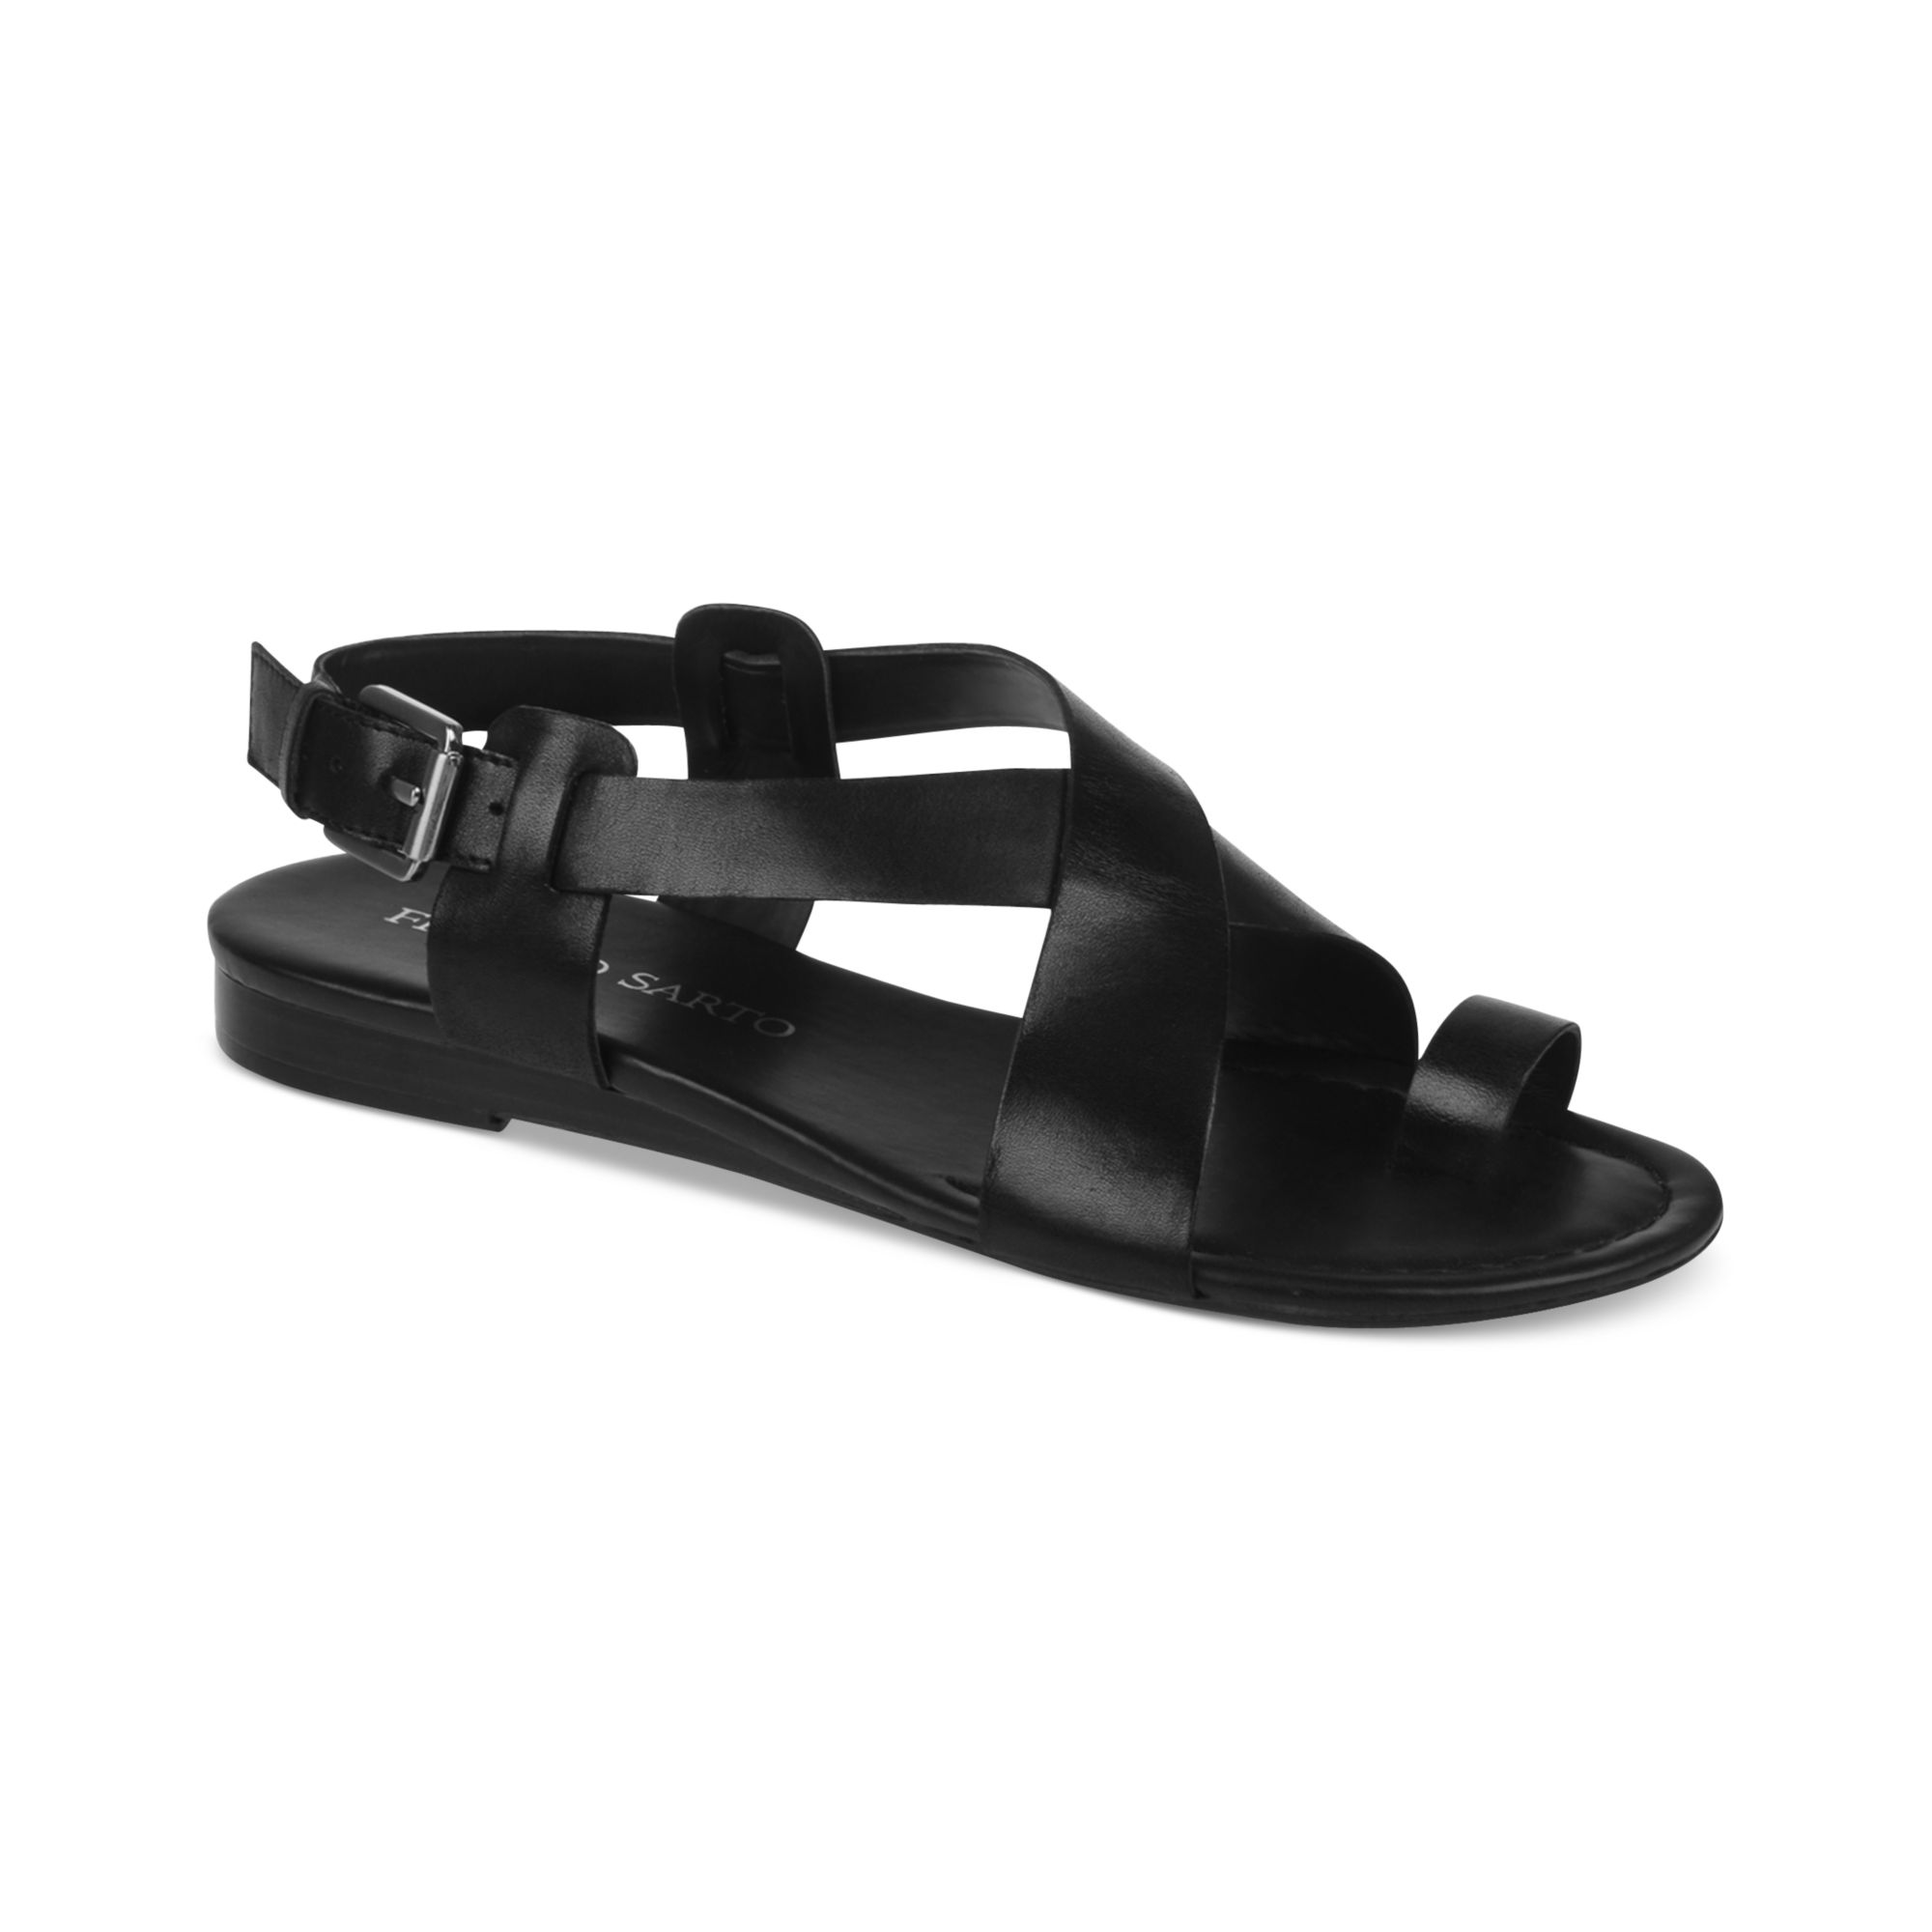 Franco sarto Georgie Flat Sandals in Black | Lyst